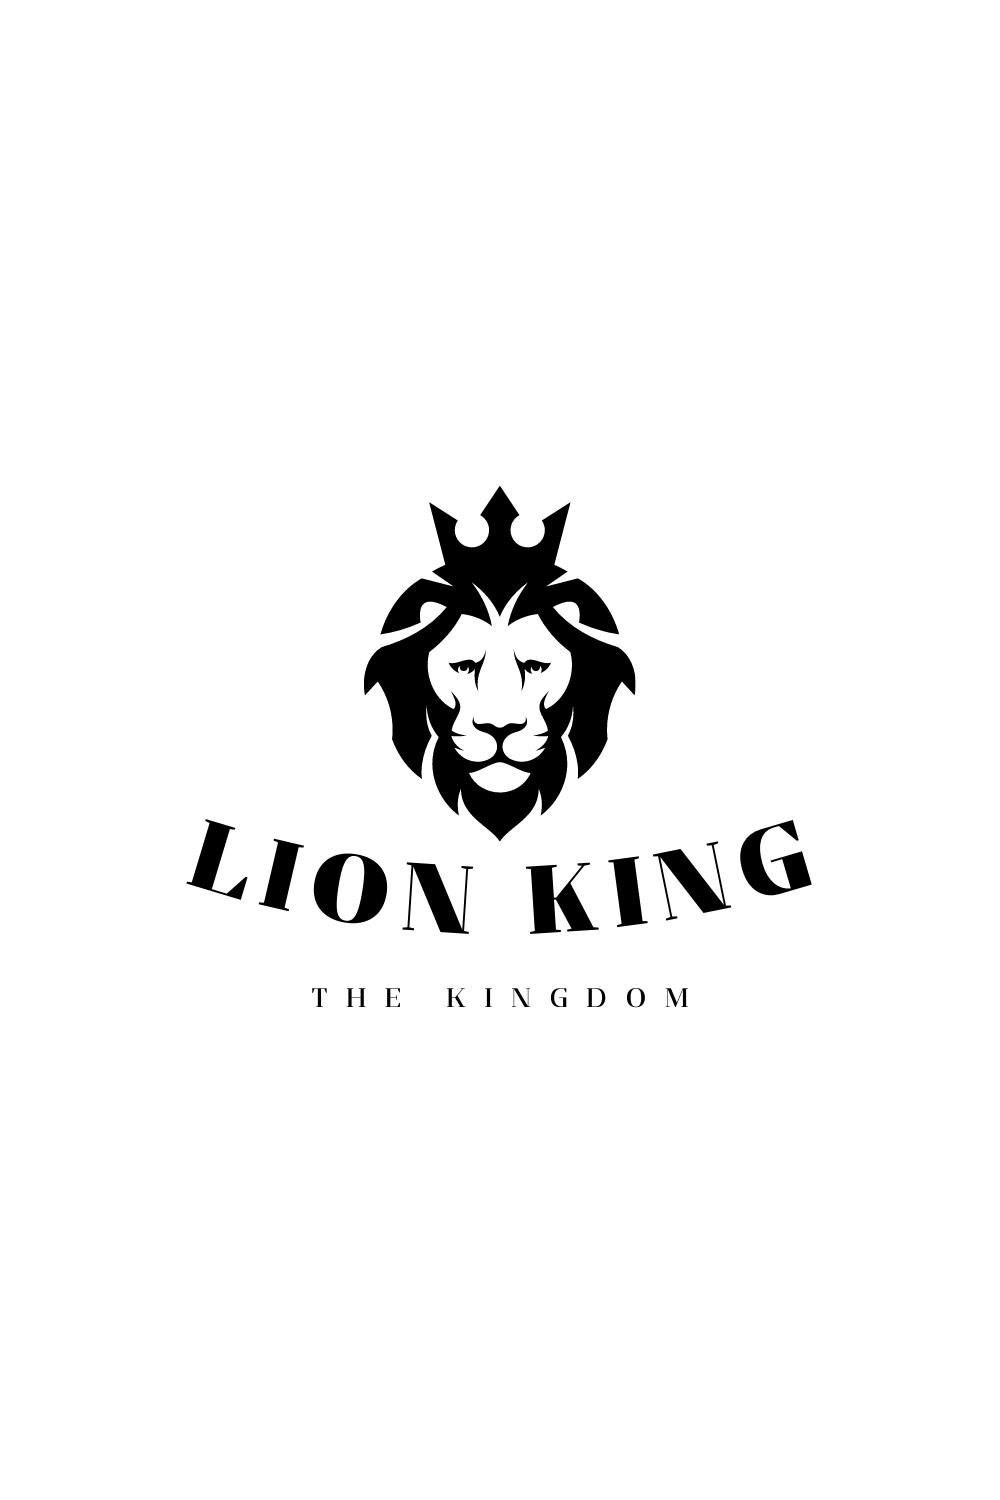 Black Minimalist Lion King Logo Design Pinterest image.